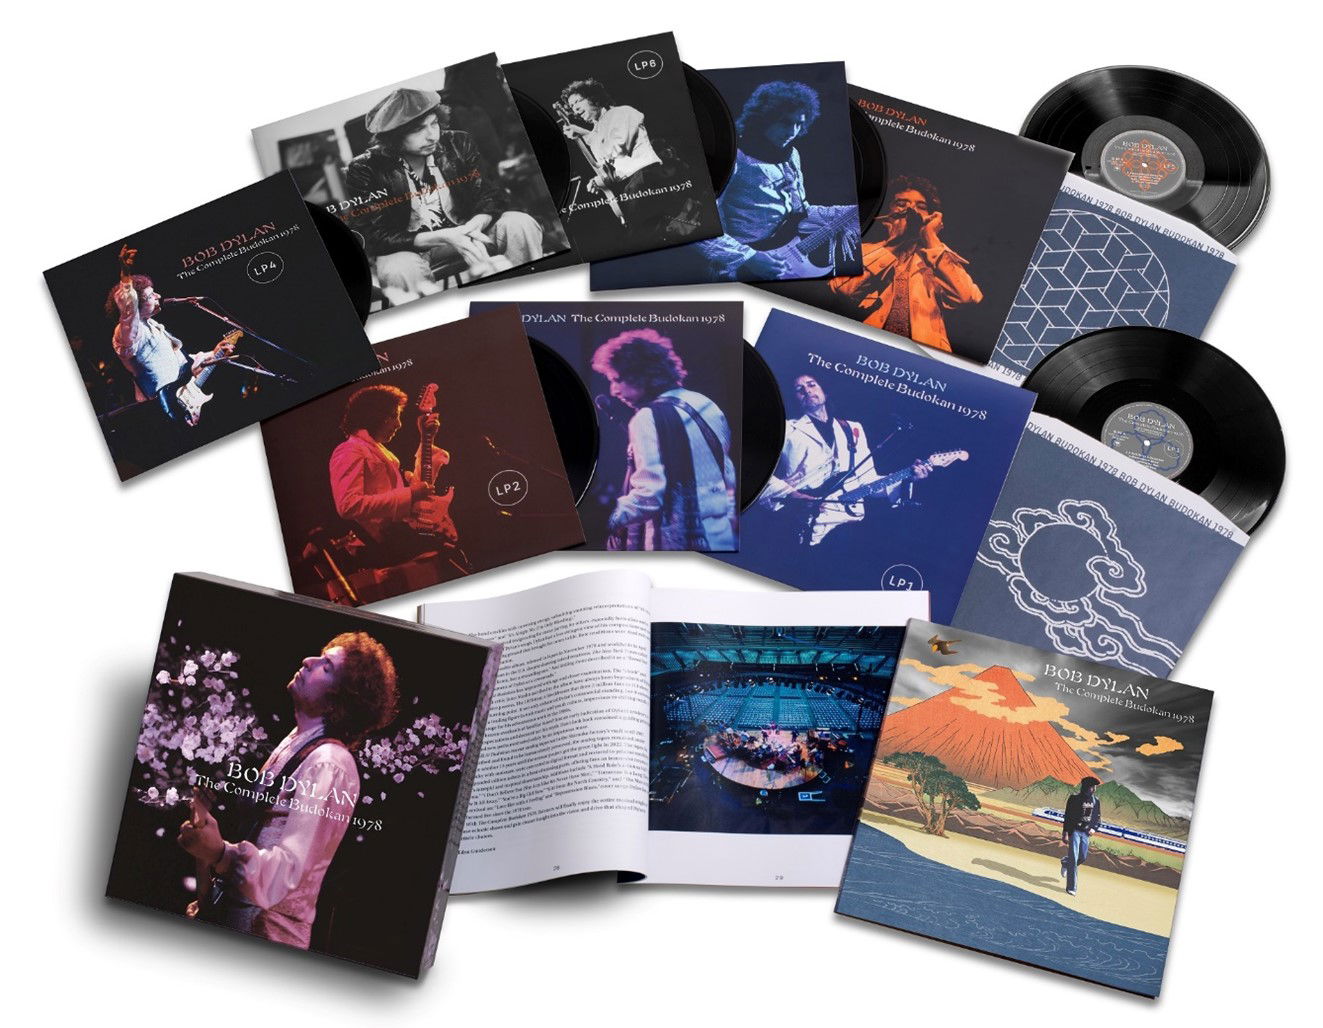 Bob Dylan ハーモニカ型USB Complete Album vol.1 正規認証品!新規格 ...